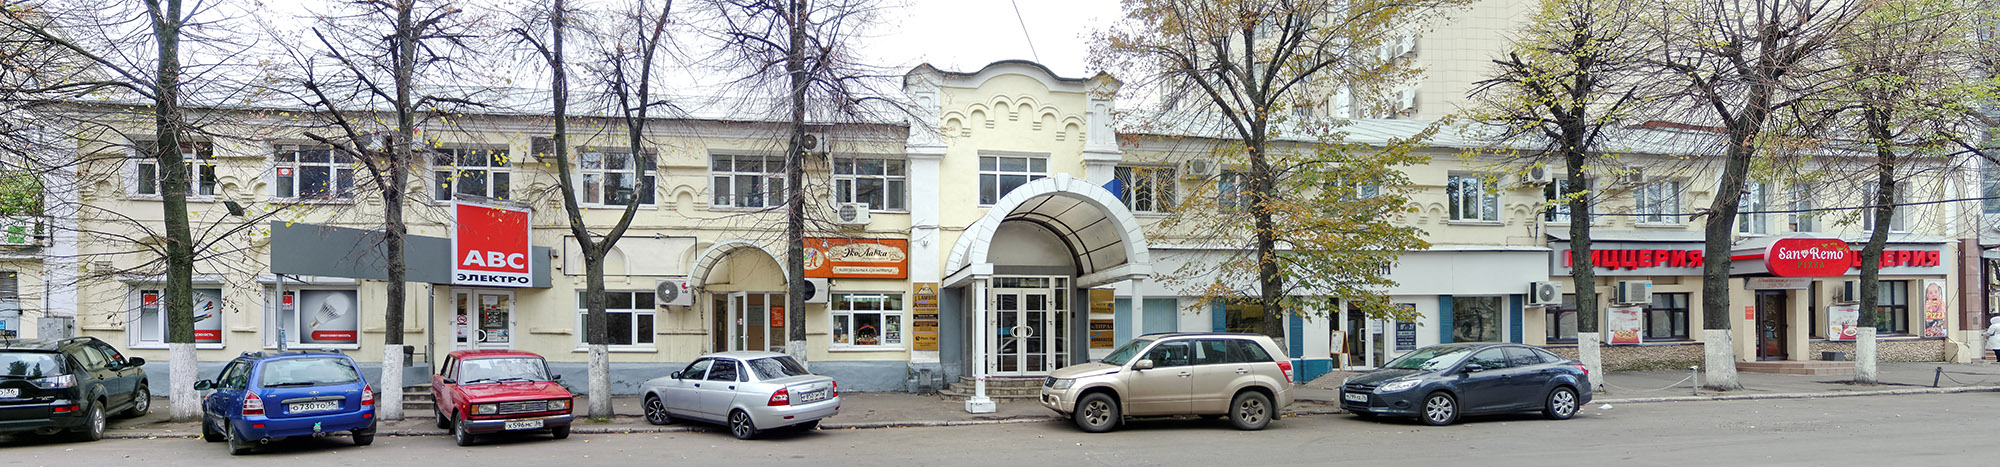 Woroneż, Улица Куцыгина, 17